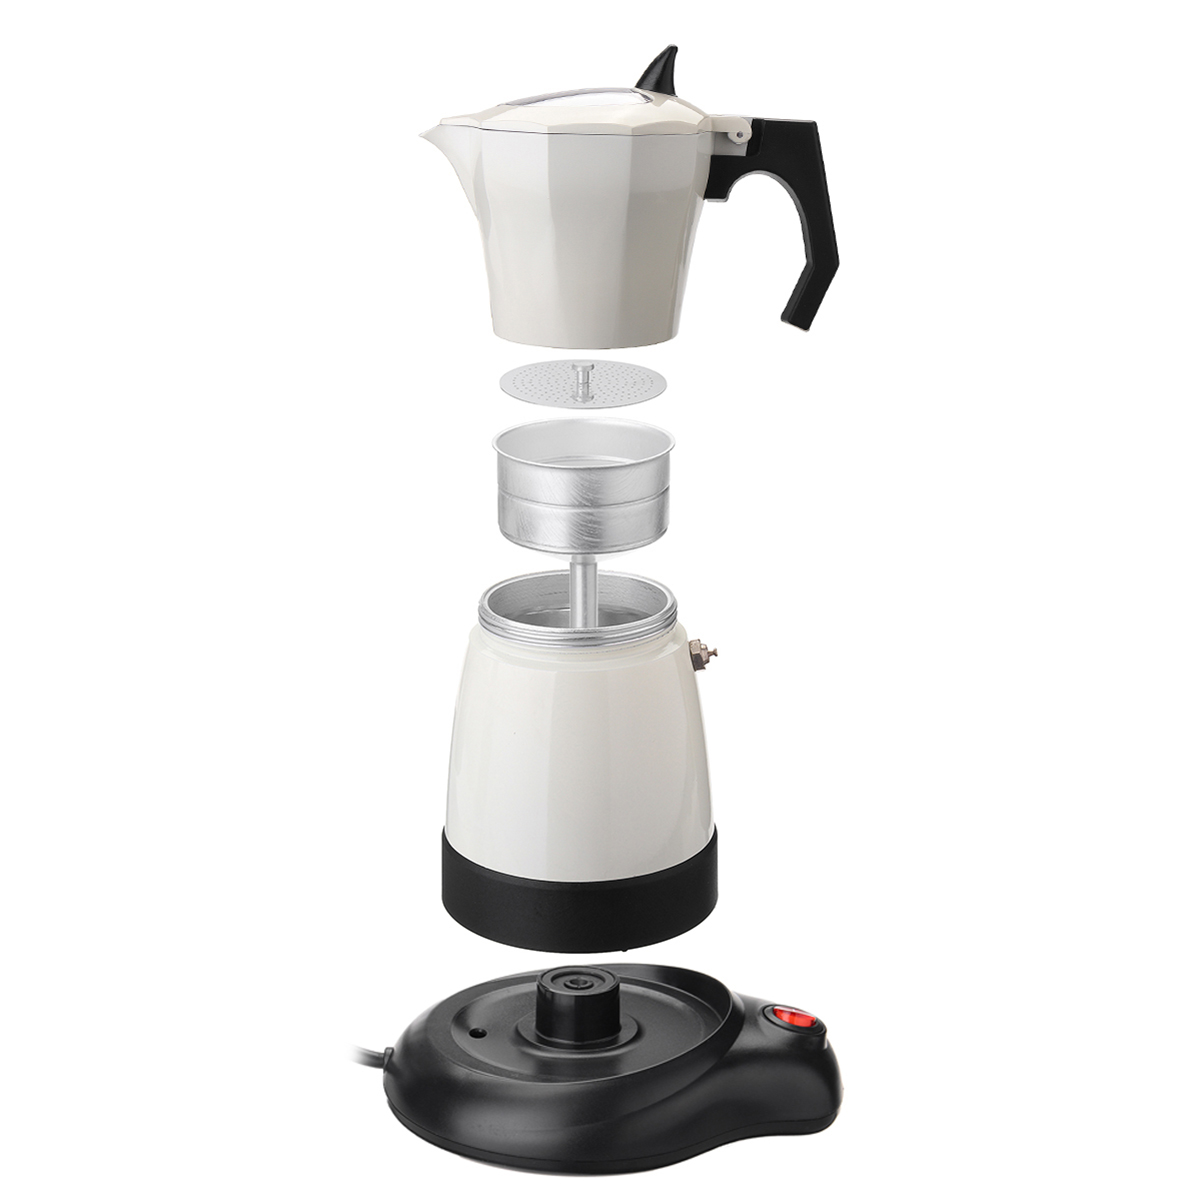 6 Cups Electric Tea Coffee Maker Pot Espresso Machine Mocha Home Office 480W Coffee Machine 17